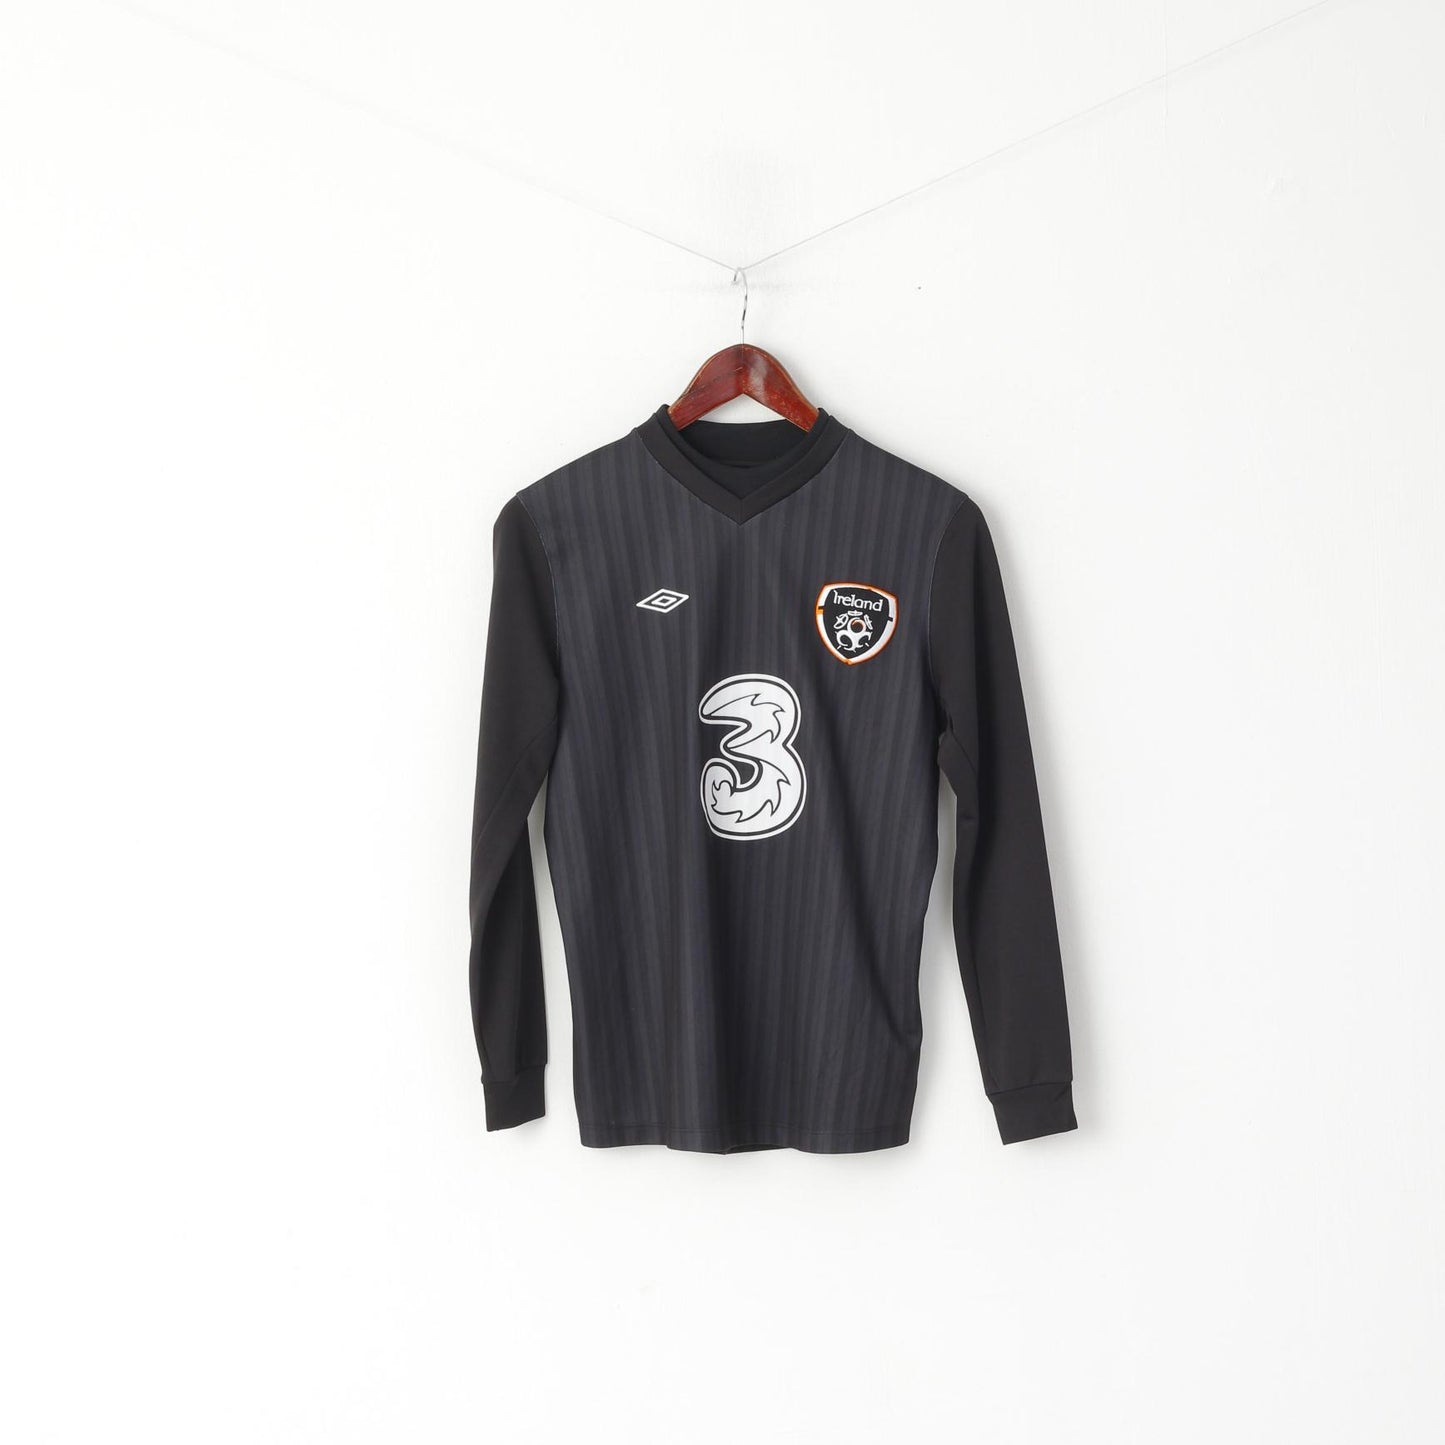 Tailored by Umbro Youth 158 XLB Shirt Black Long Sleeve  Ireland Football Club Jersey